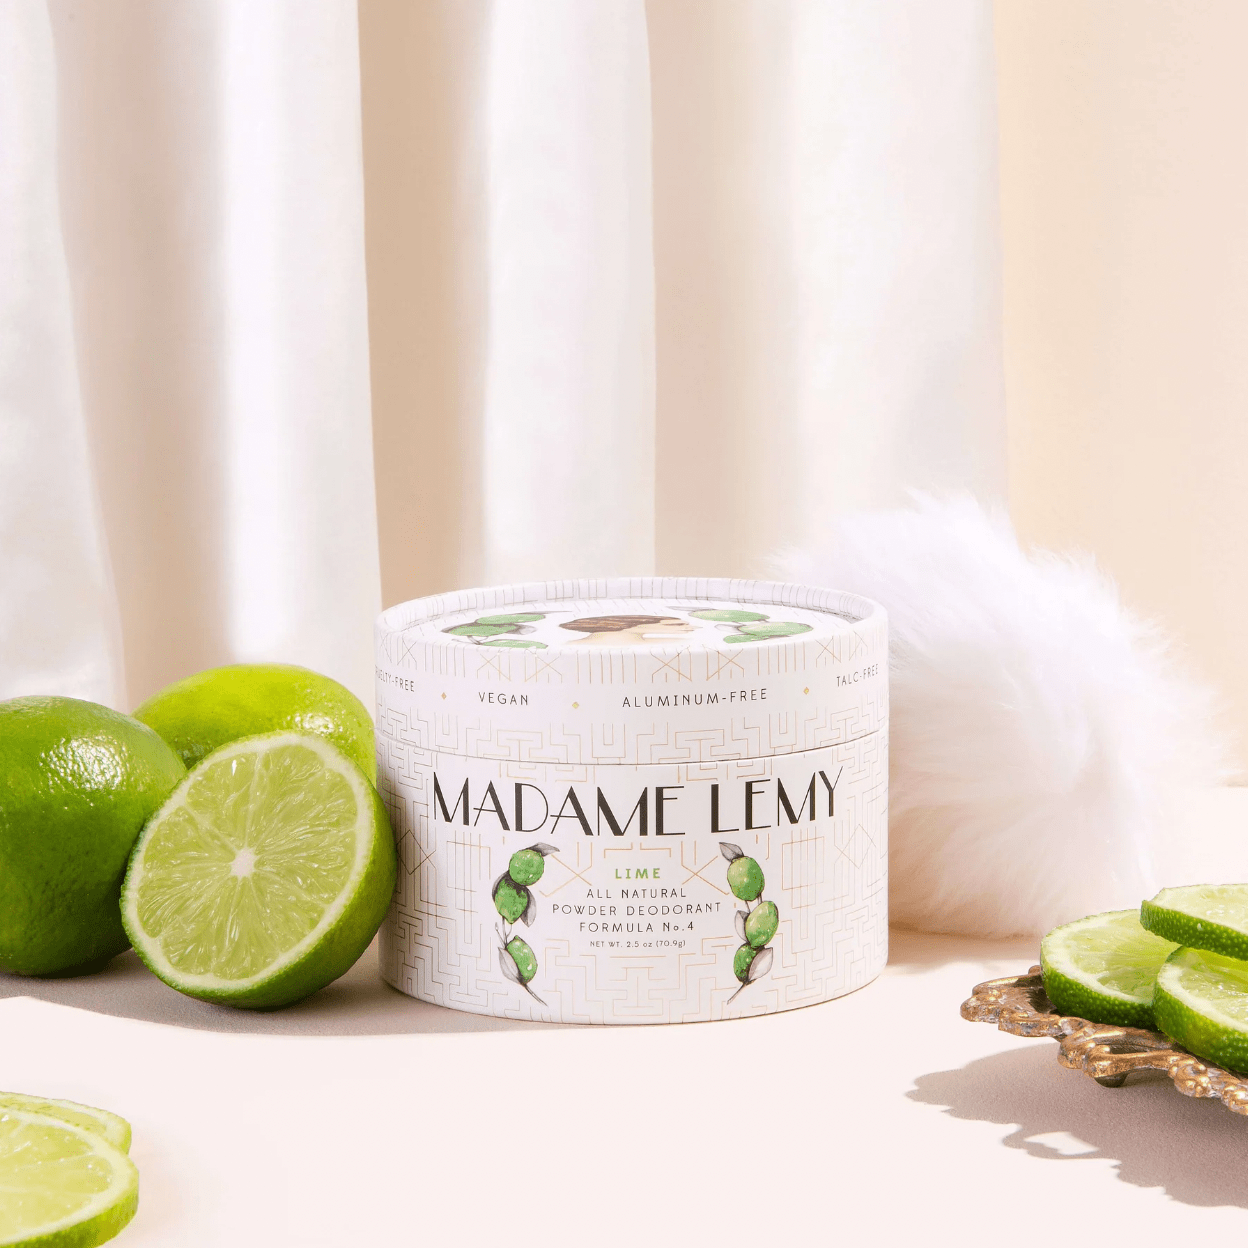 MADAME LEMY | Le Petit Deodorant, Body Powder & Dry Shampoo - Lime & Bergamont